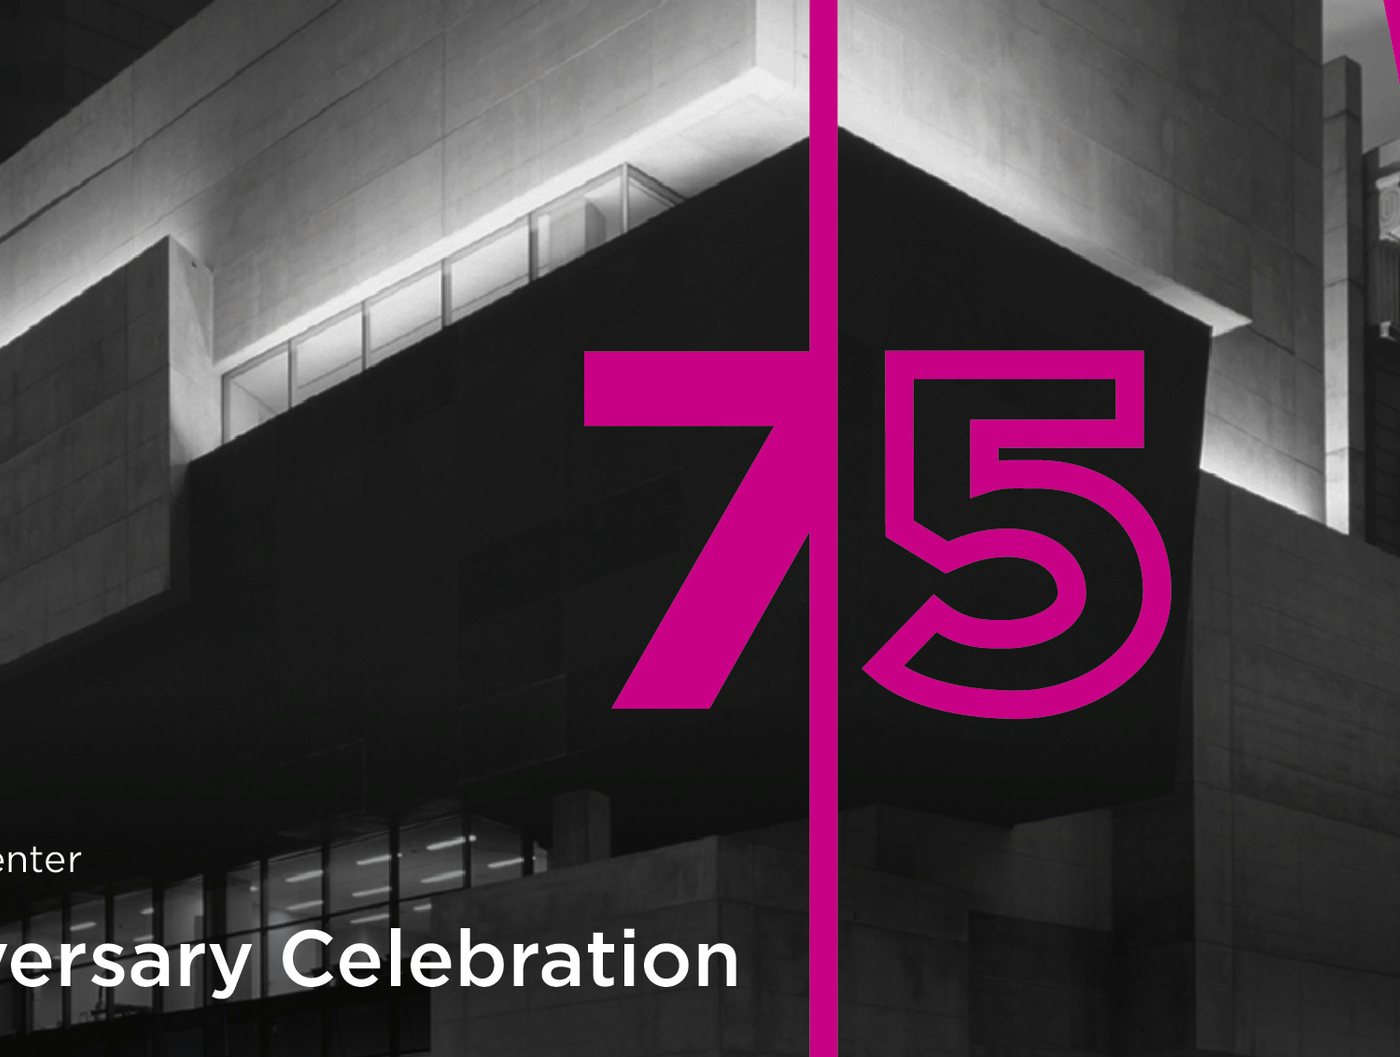 75th Anniversary Celebration